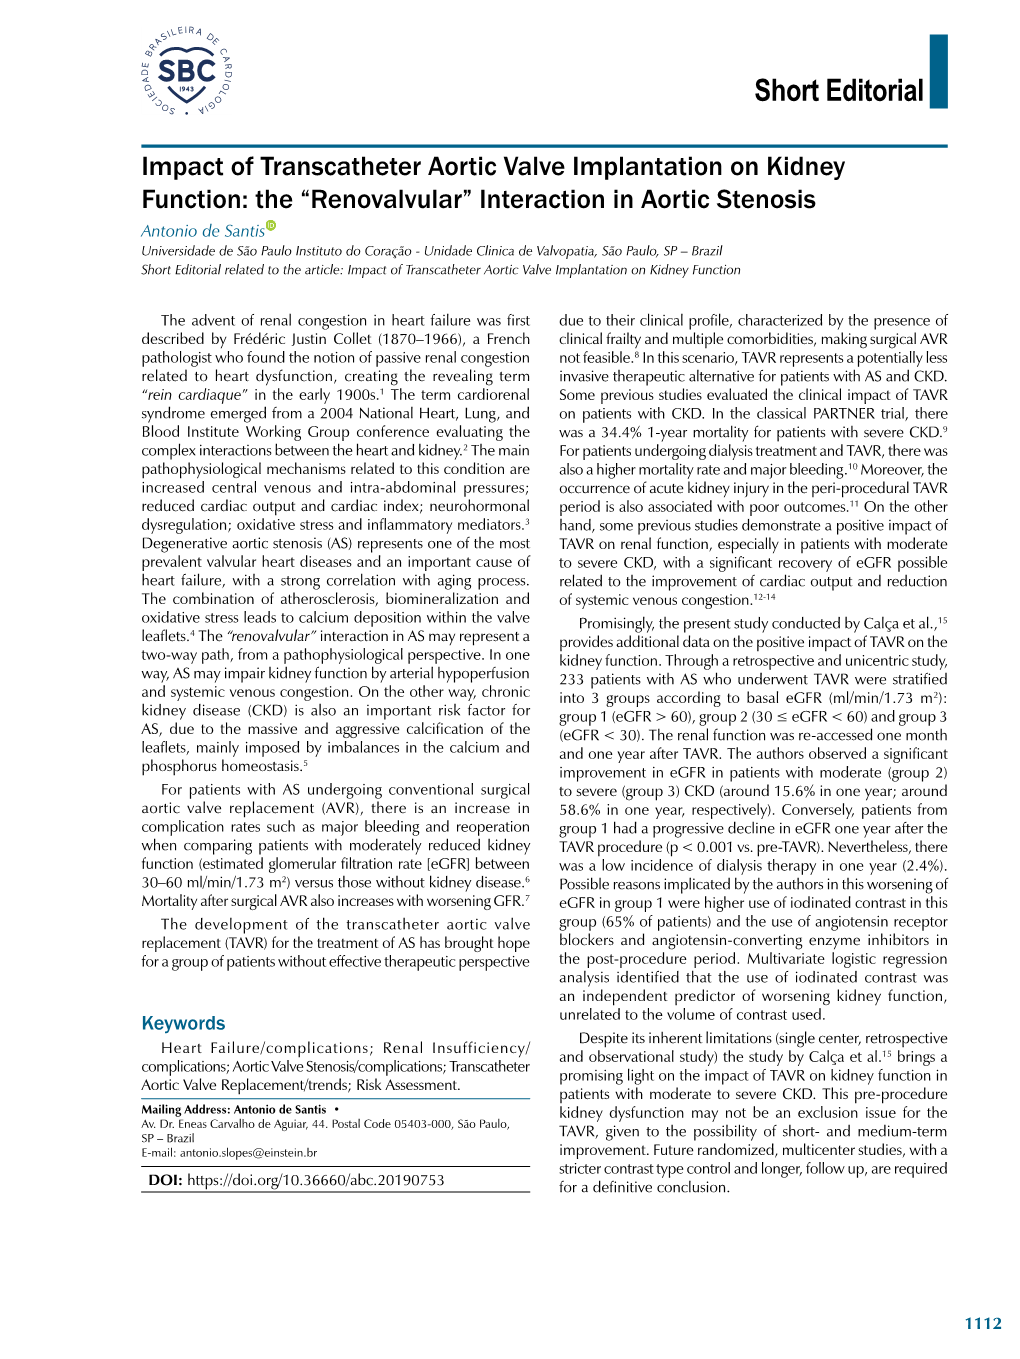 Impact of Transcatheter Aortic Valve Implantation on Kidney Function